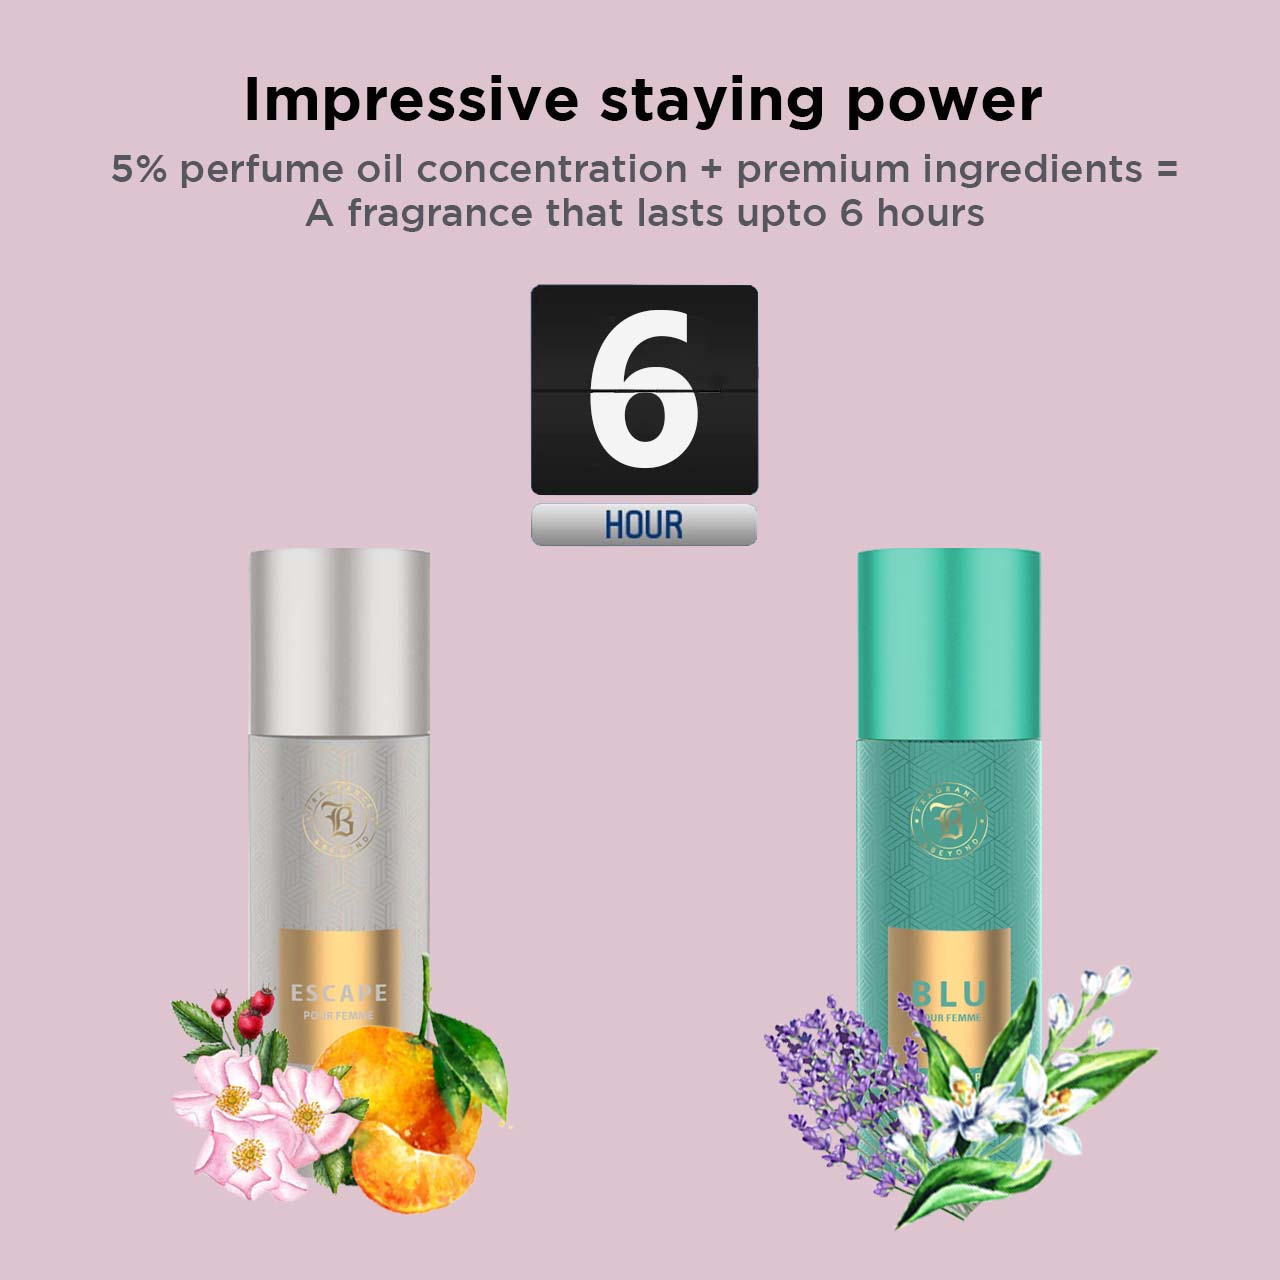 Perfume Body Deodorant for Women, (Pack of 2) - 400ml